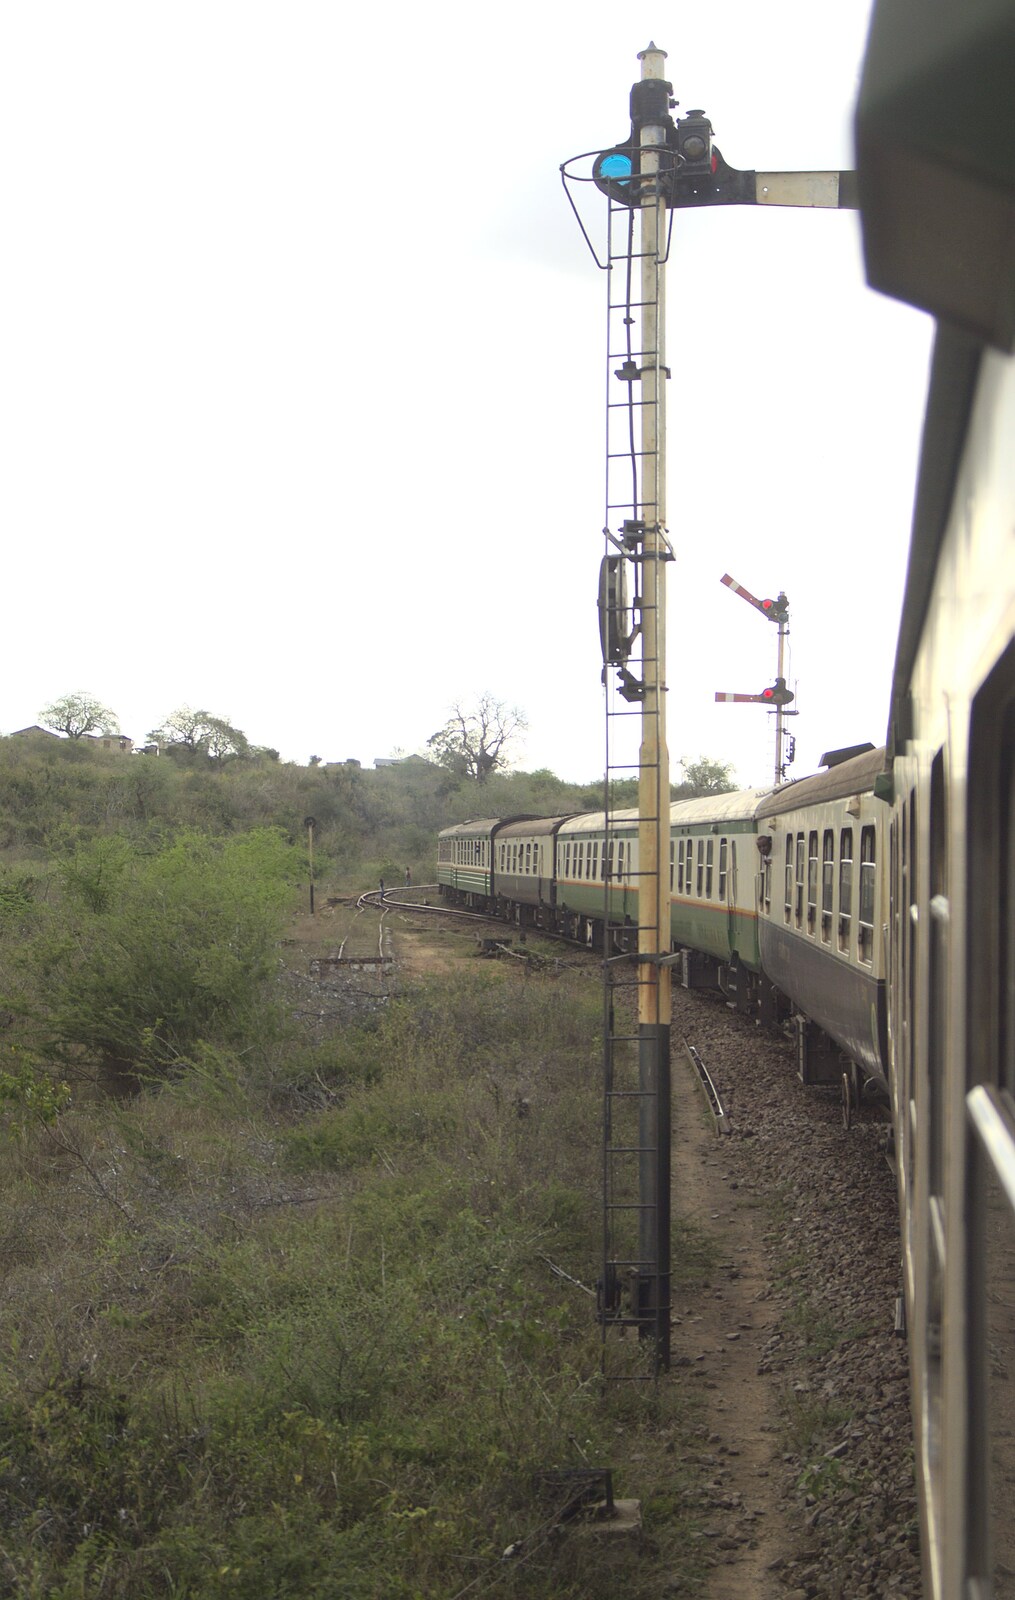 Long Train (not) Runnin': Tiwi Beach, Mombasa, Kenya - 7th November 2010: The Kenya Railway is using semaphore signals